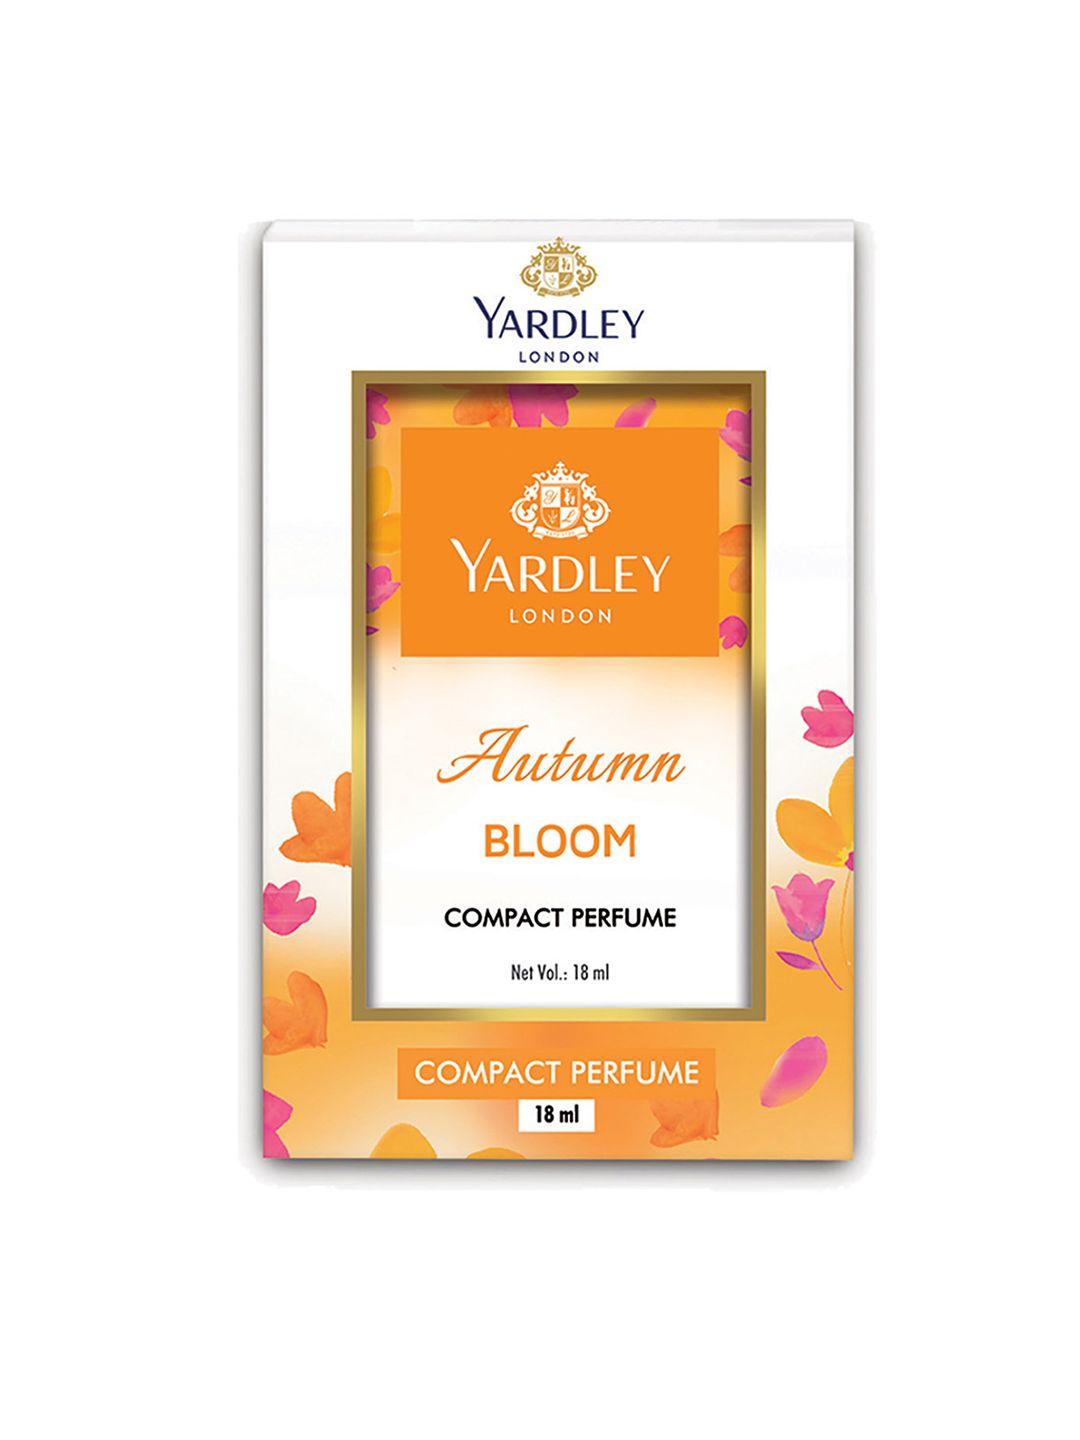 yardley london autumn bloom compact perfume - 18ml